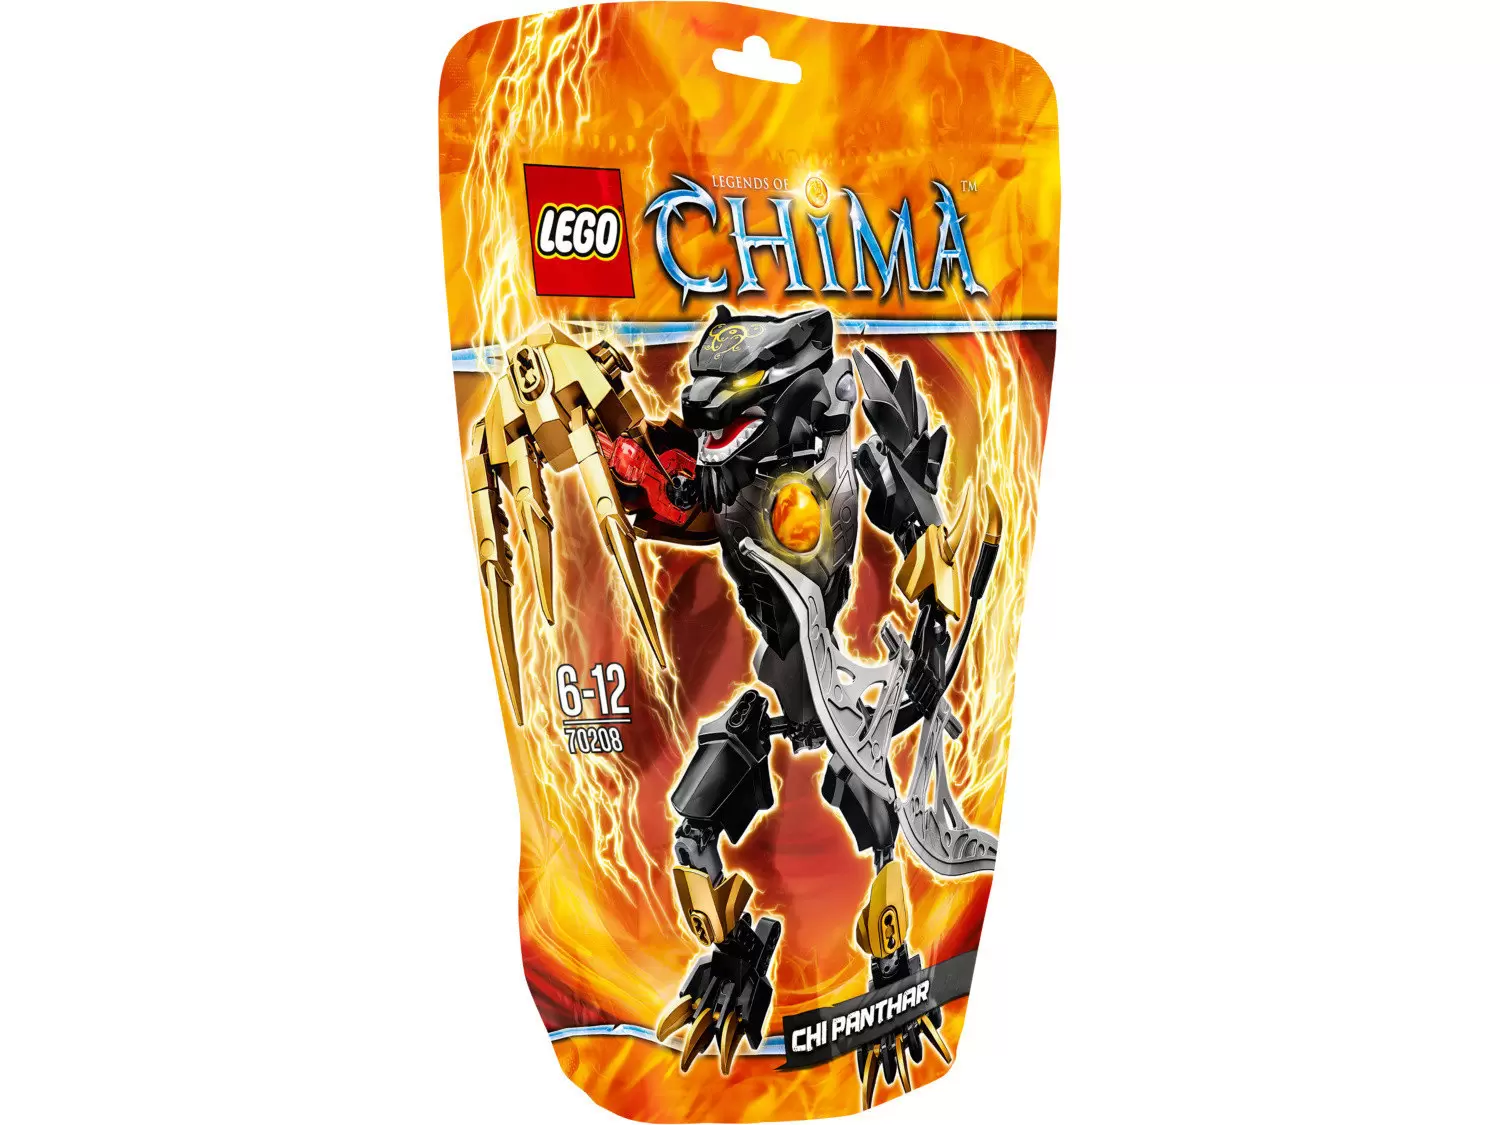 LEGO Legends of Chima - Chi Panthar